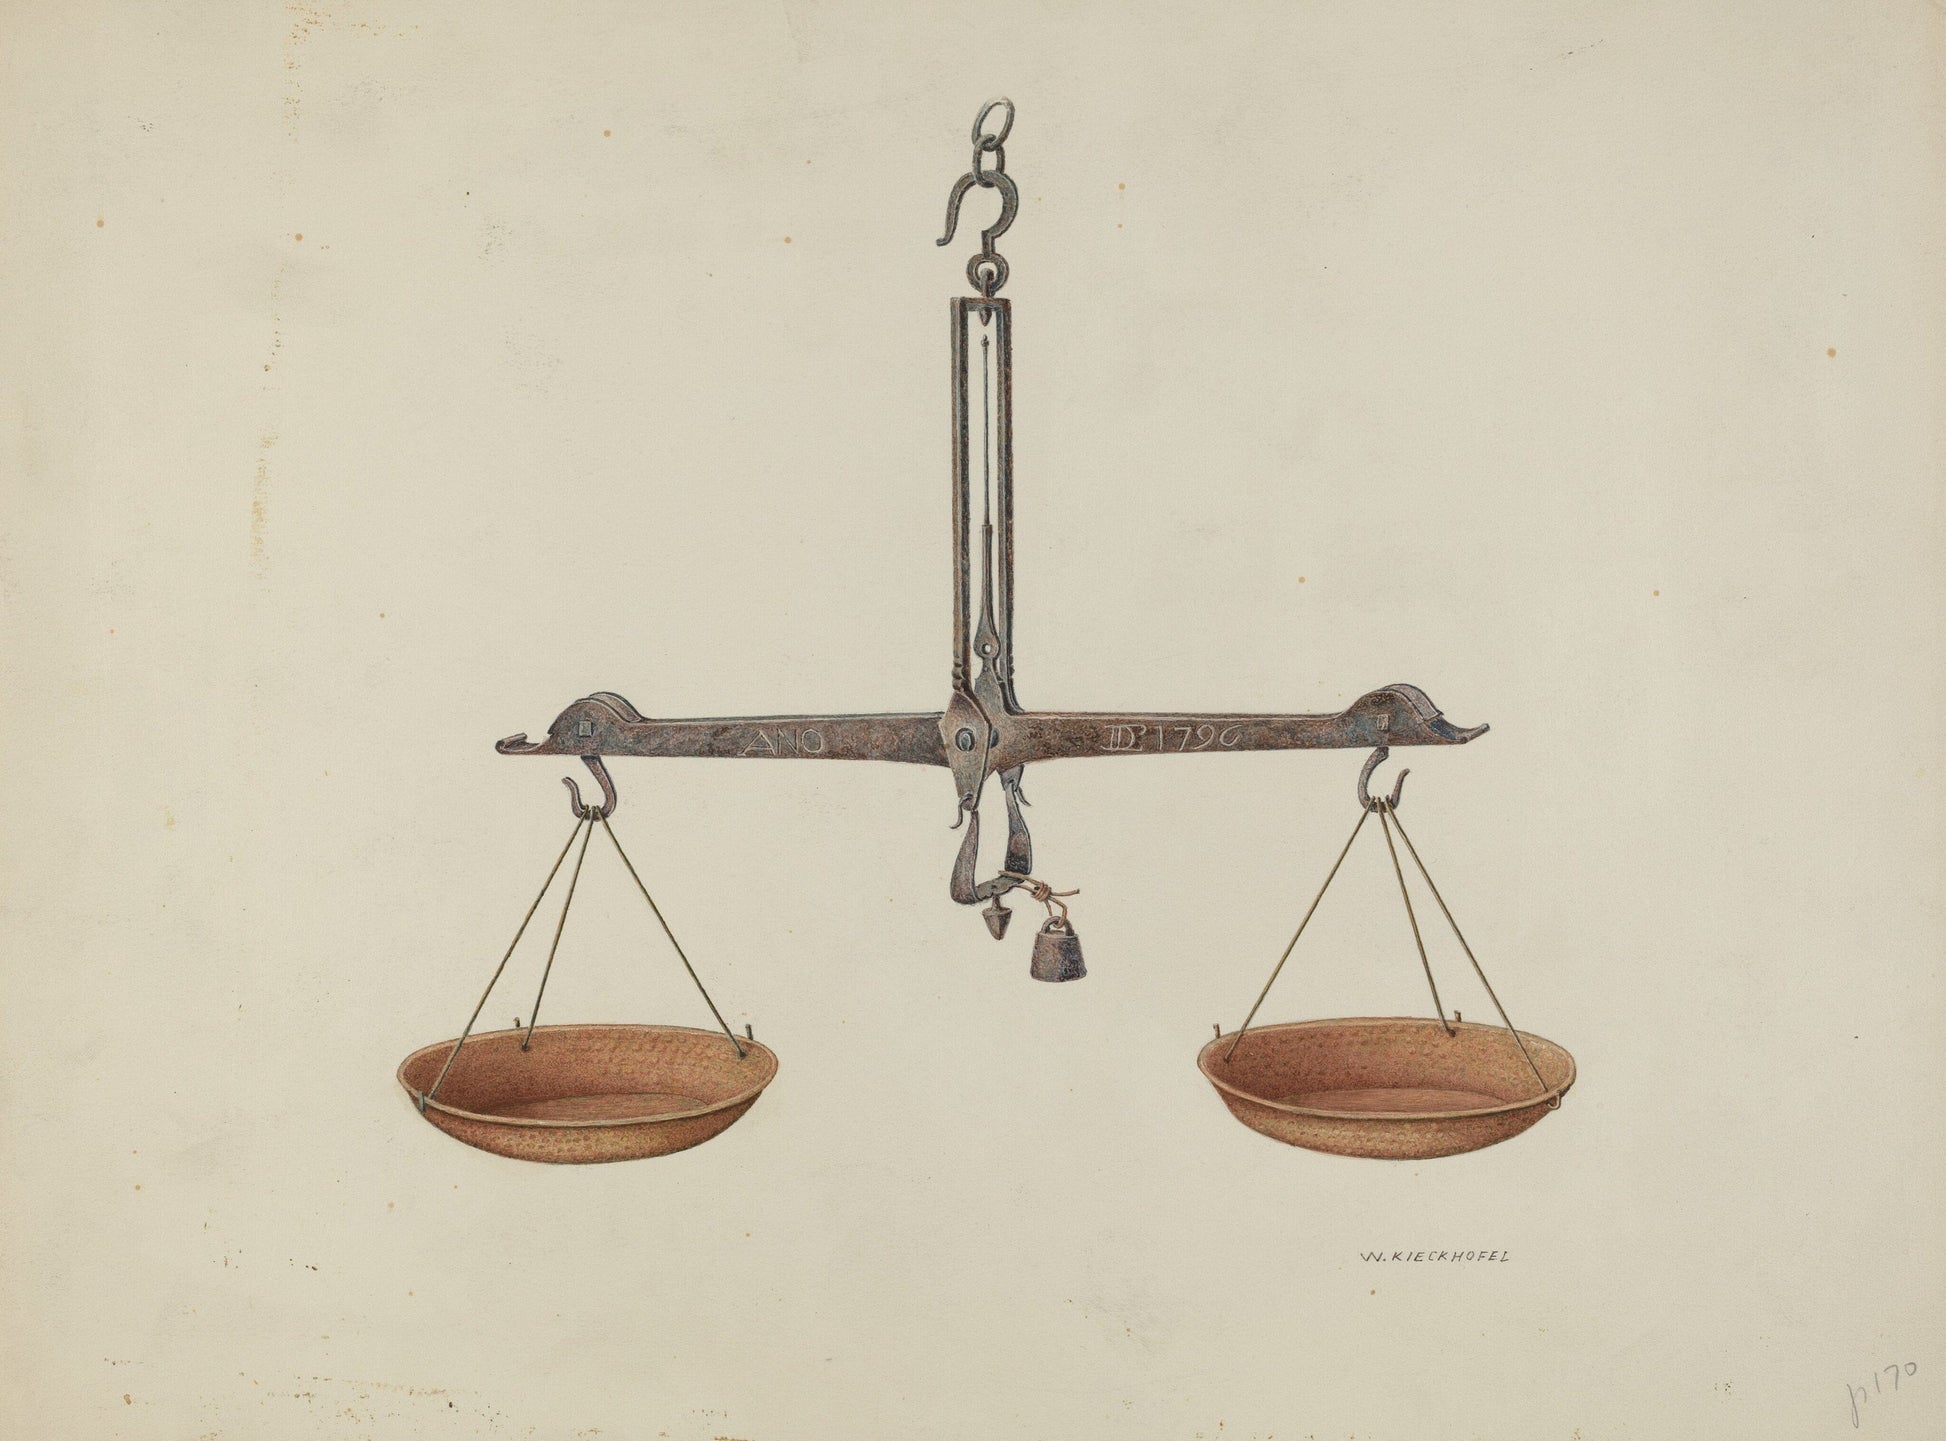 Balance scales (1940s) | Scientific artwork Posters, Prints, & Visual Artwork The Trumpet Shop   